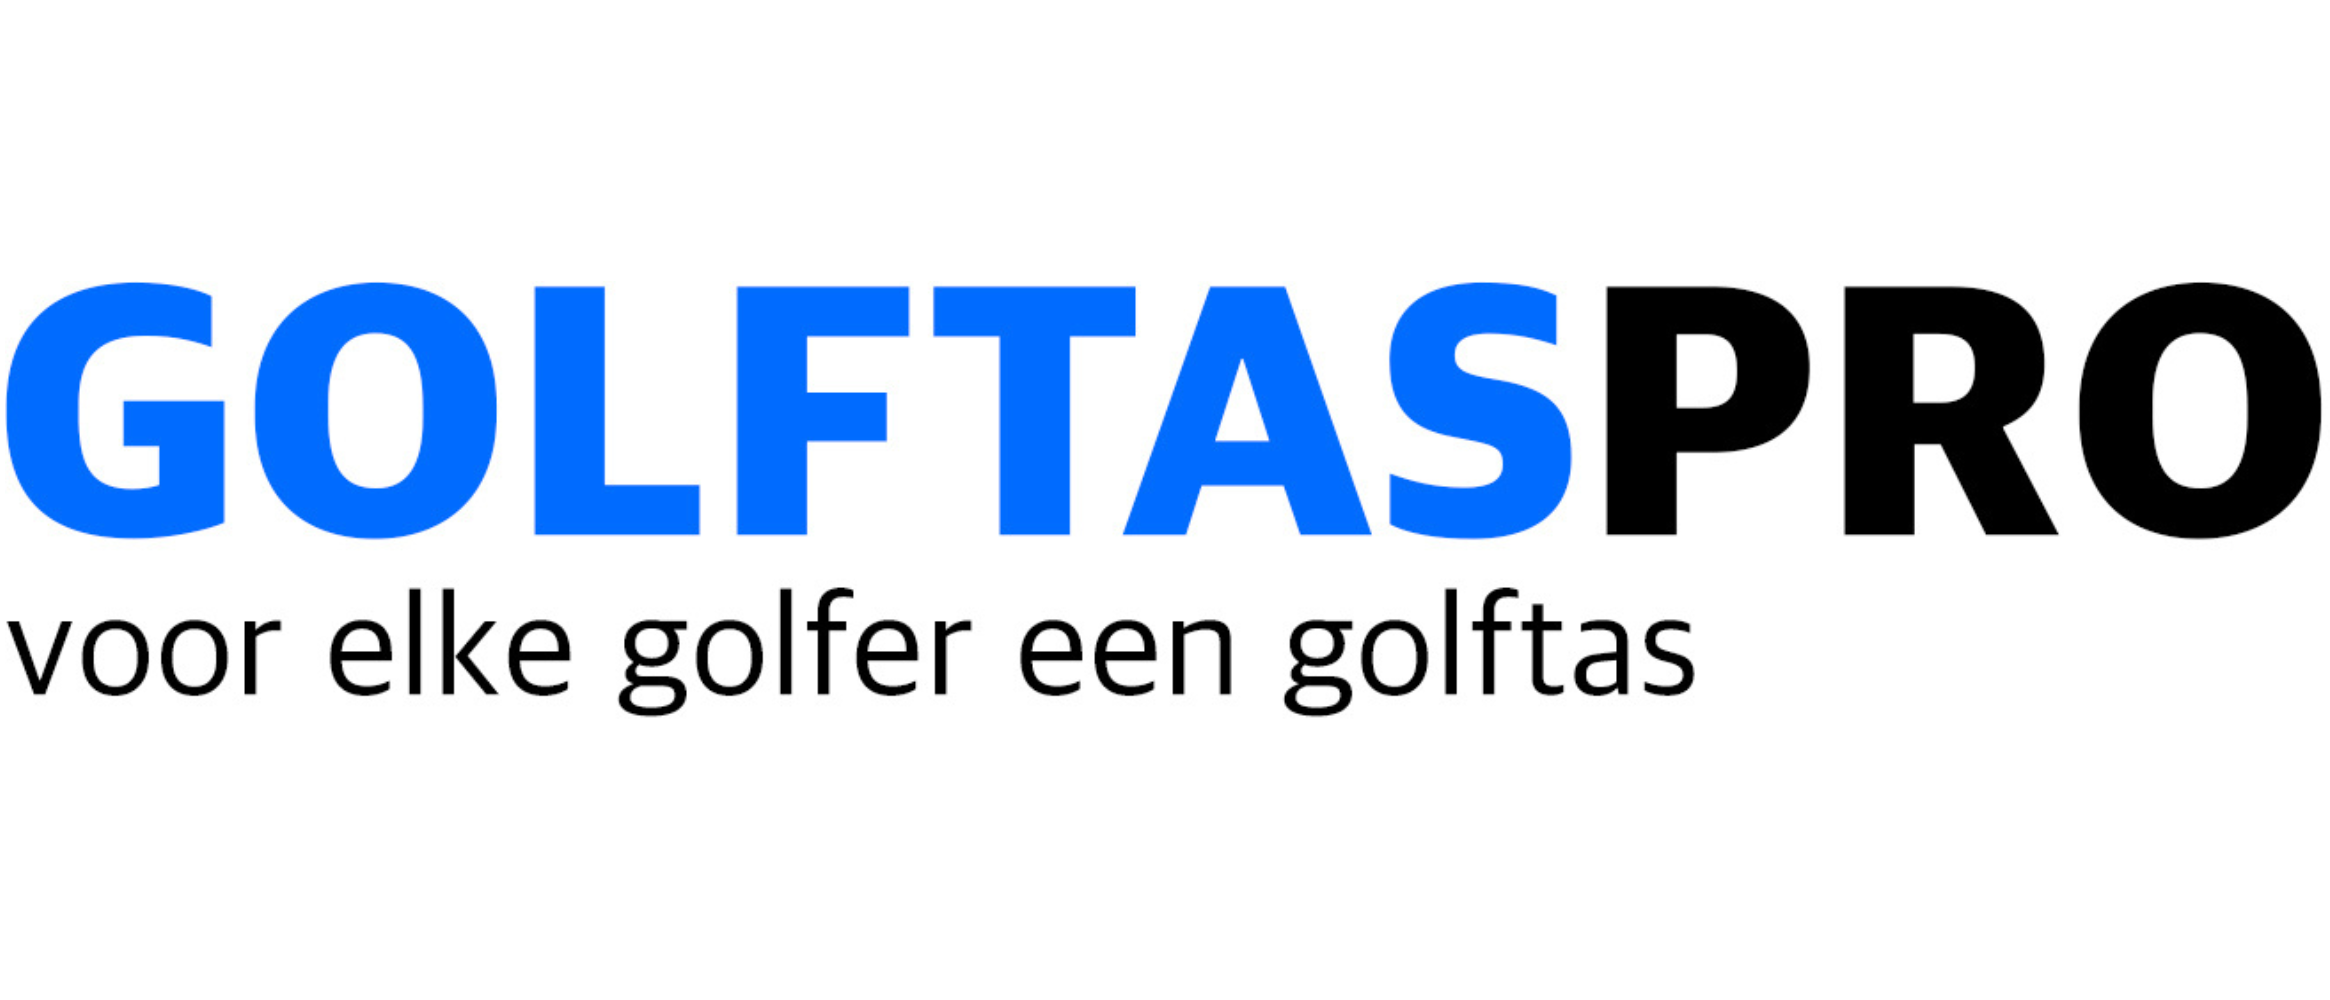 Golftaspro.nl